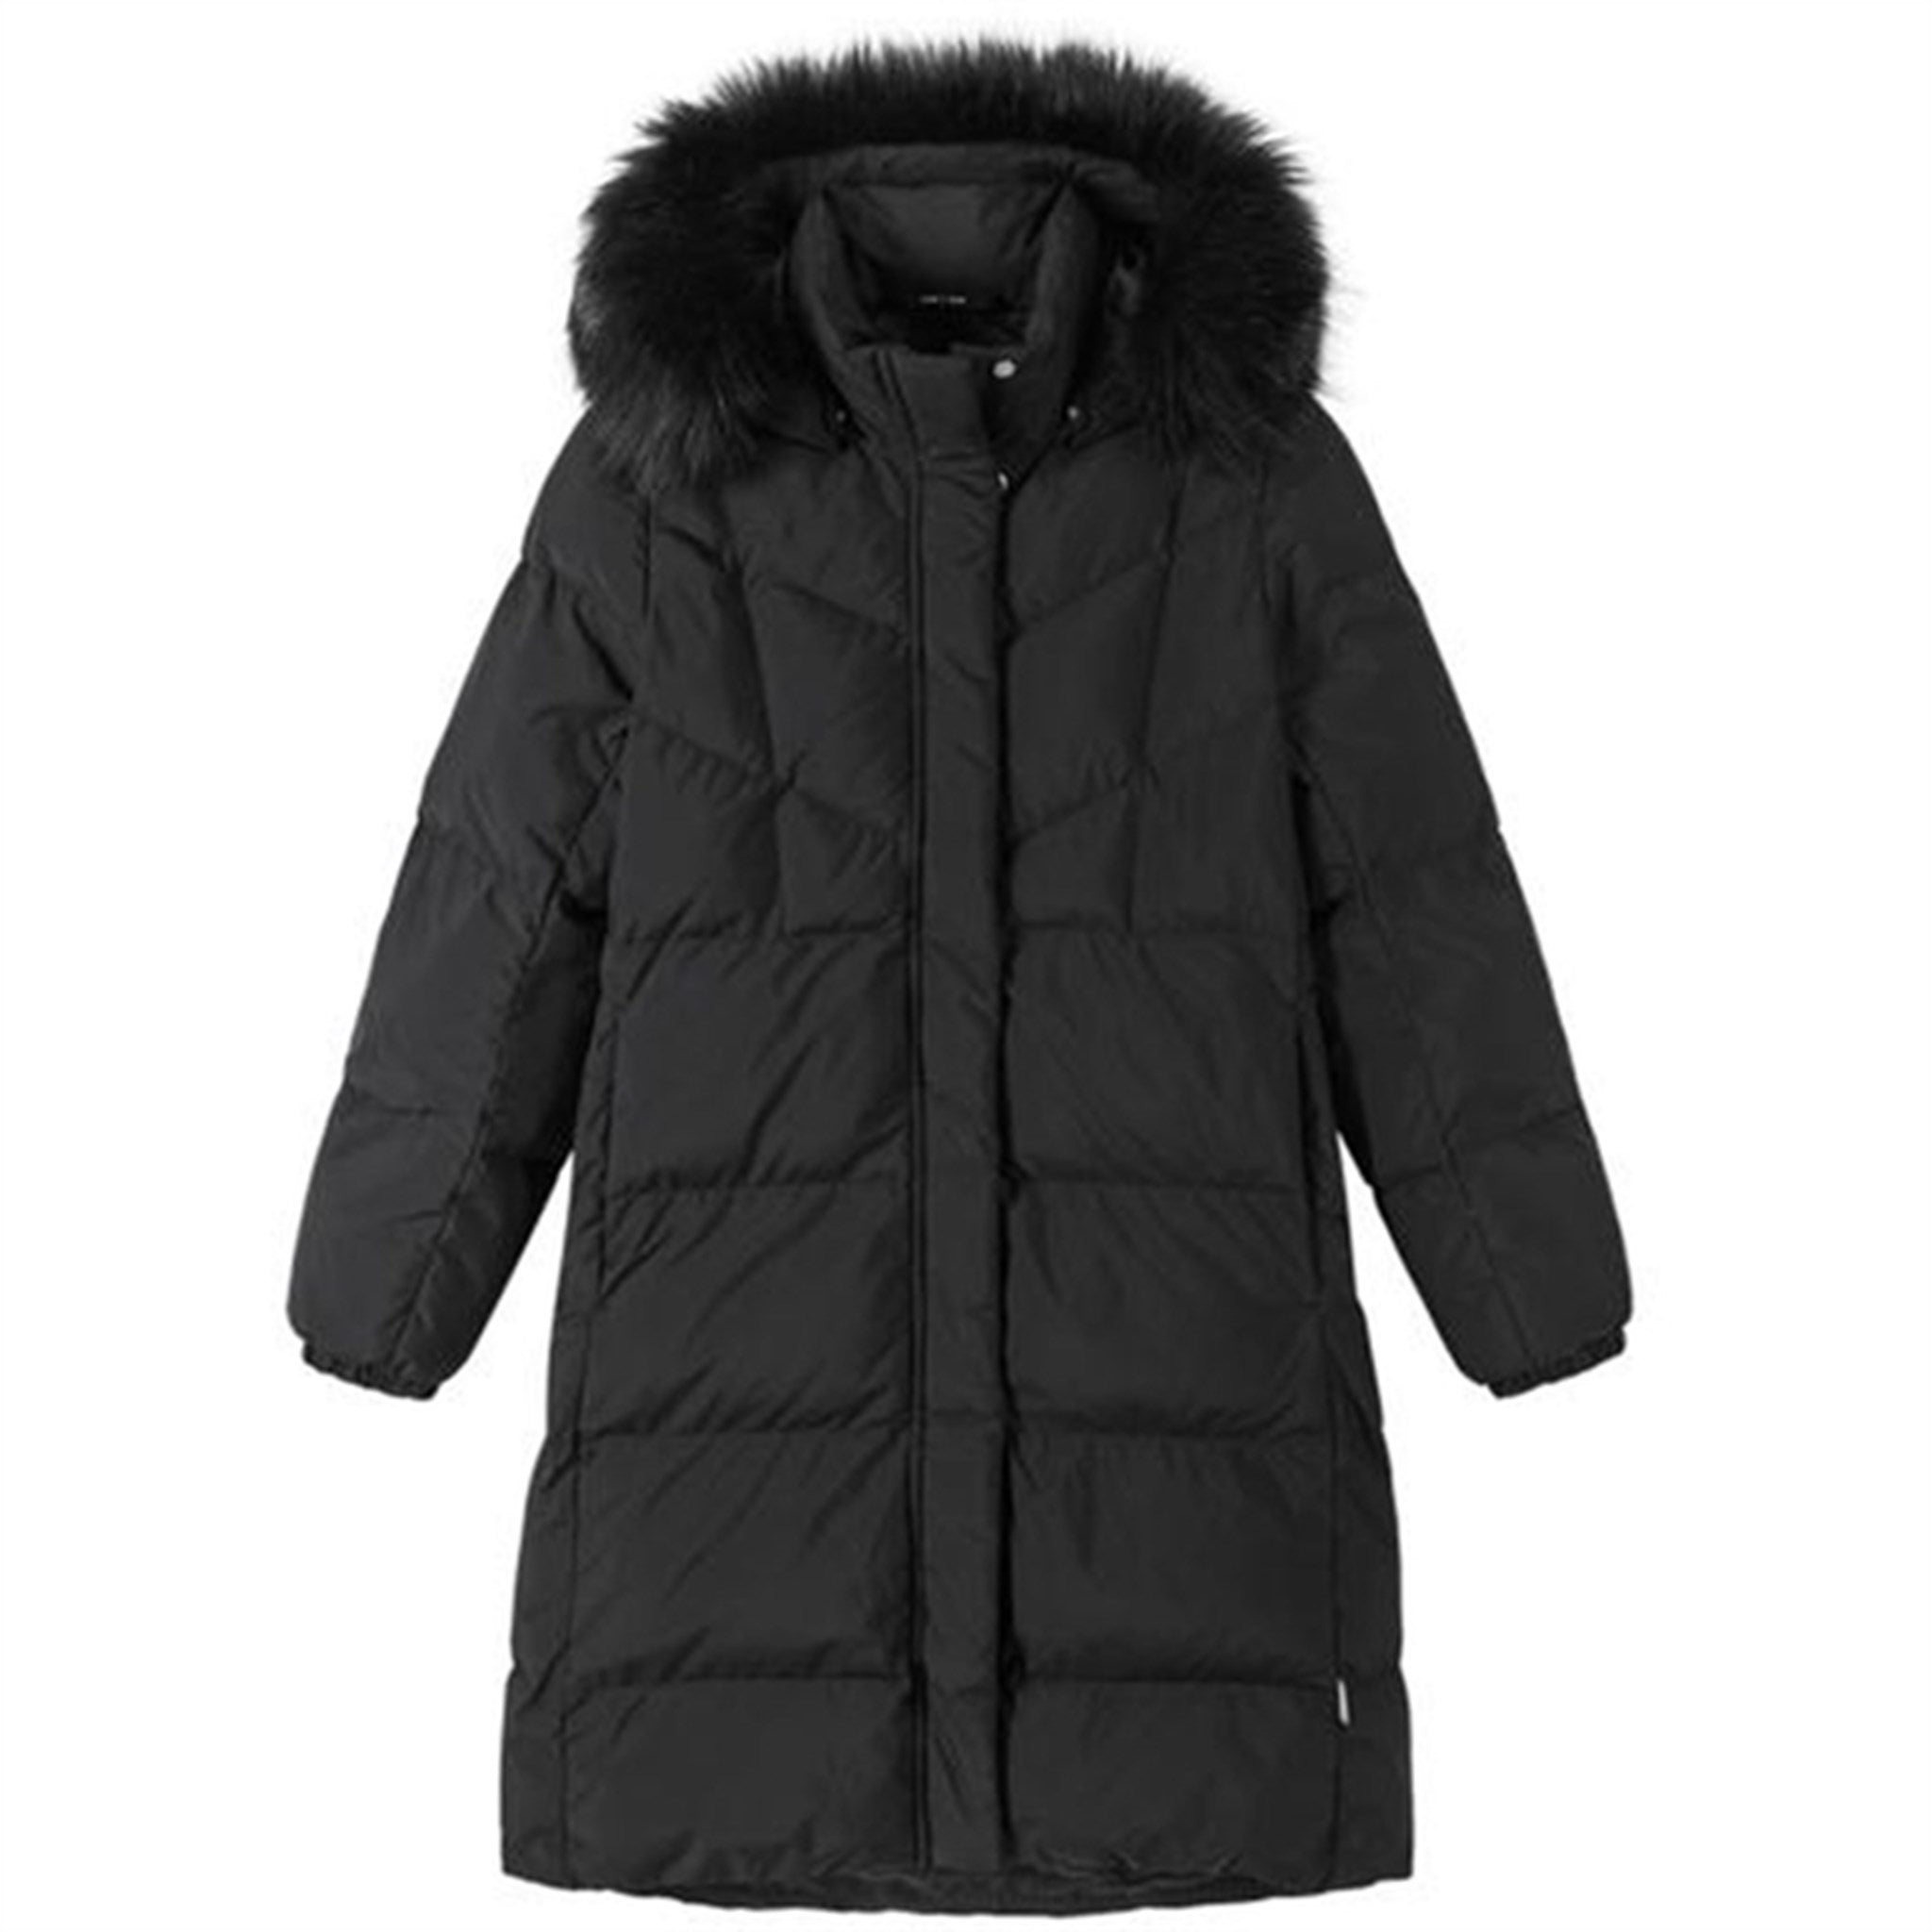 Reima Winter Jacket Siemaus Black